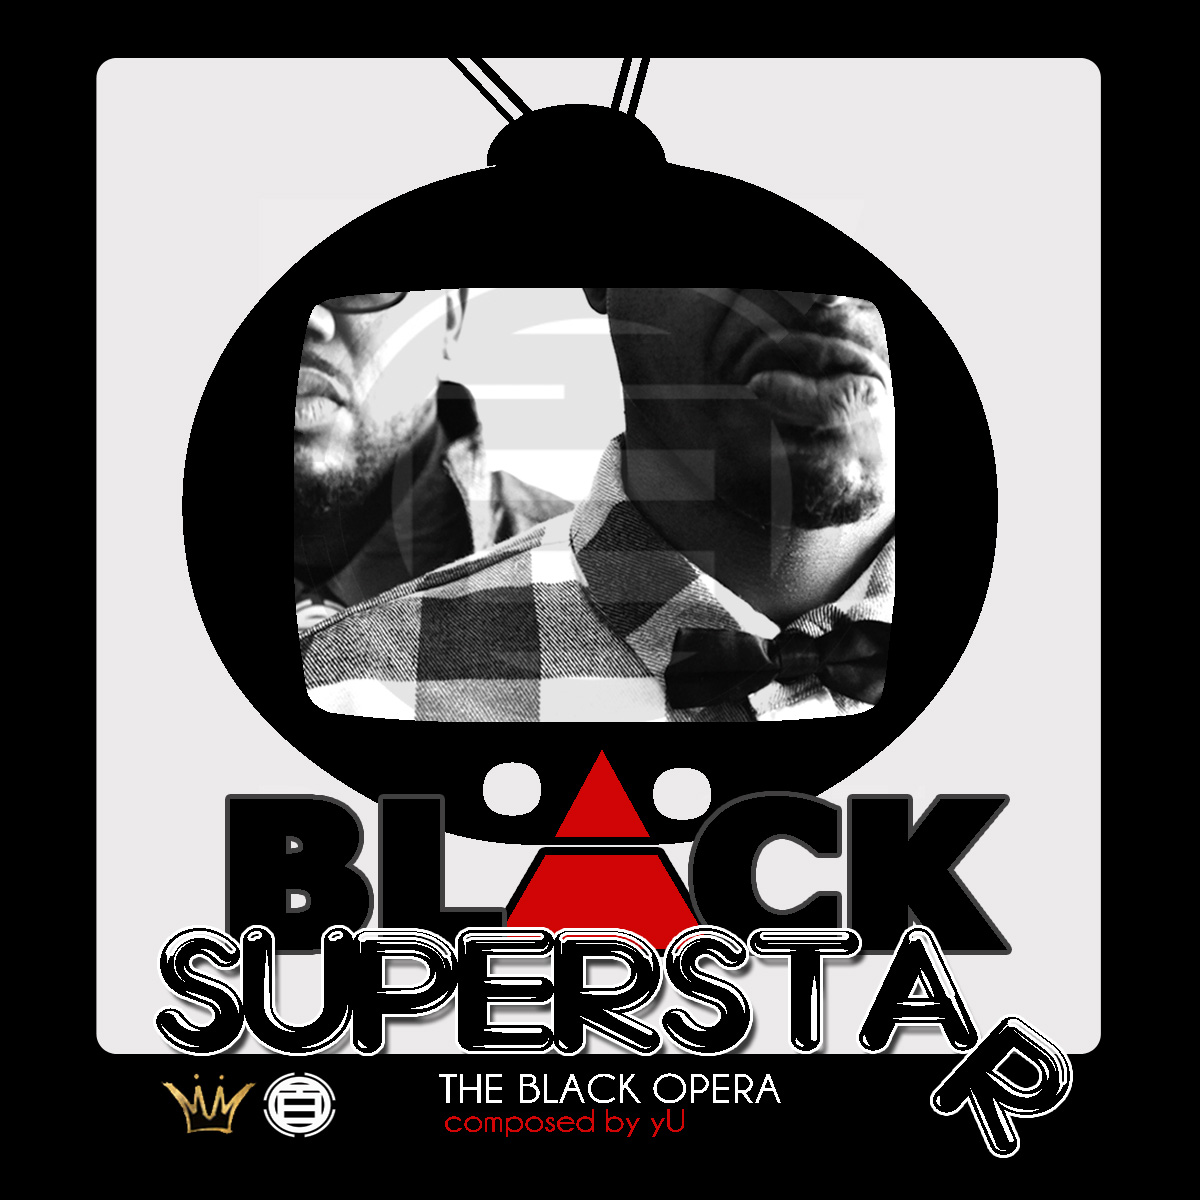 The Black Opera - "Black Superstar" (Produced by yU)